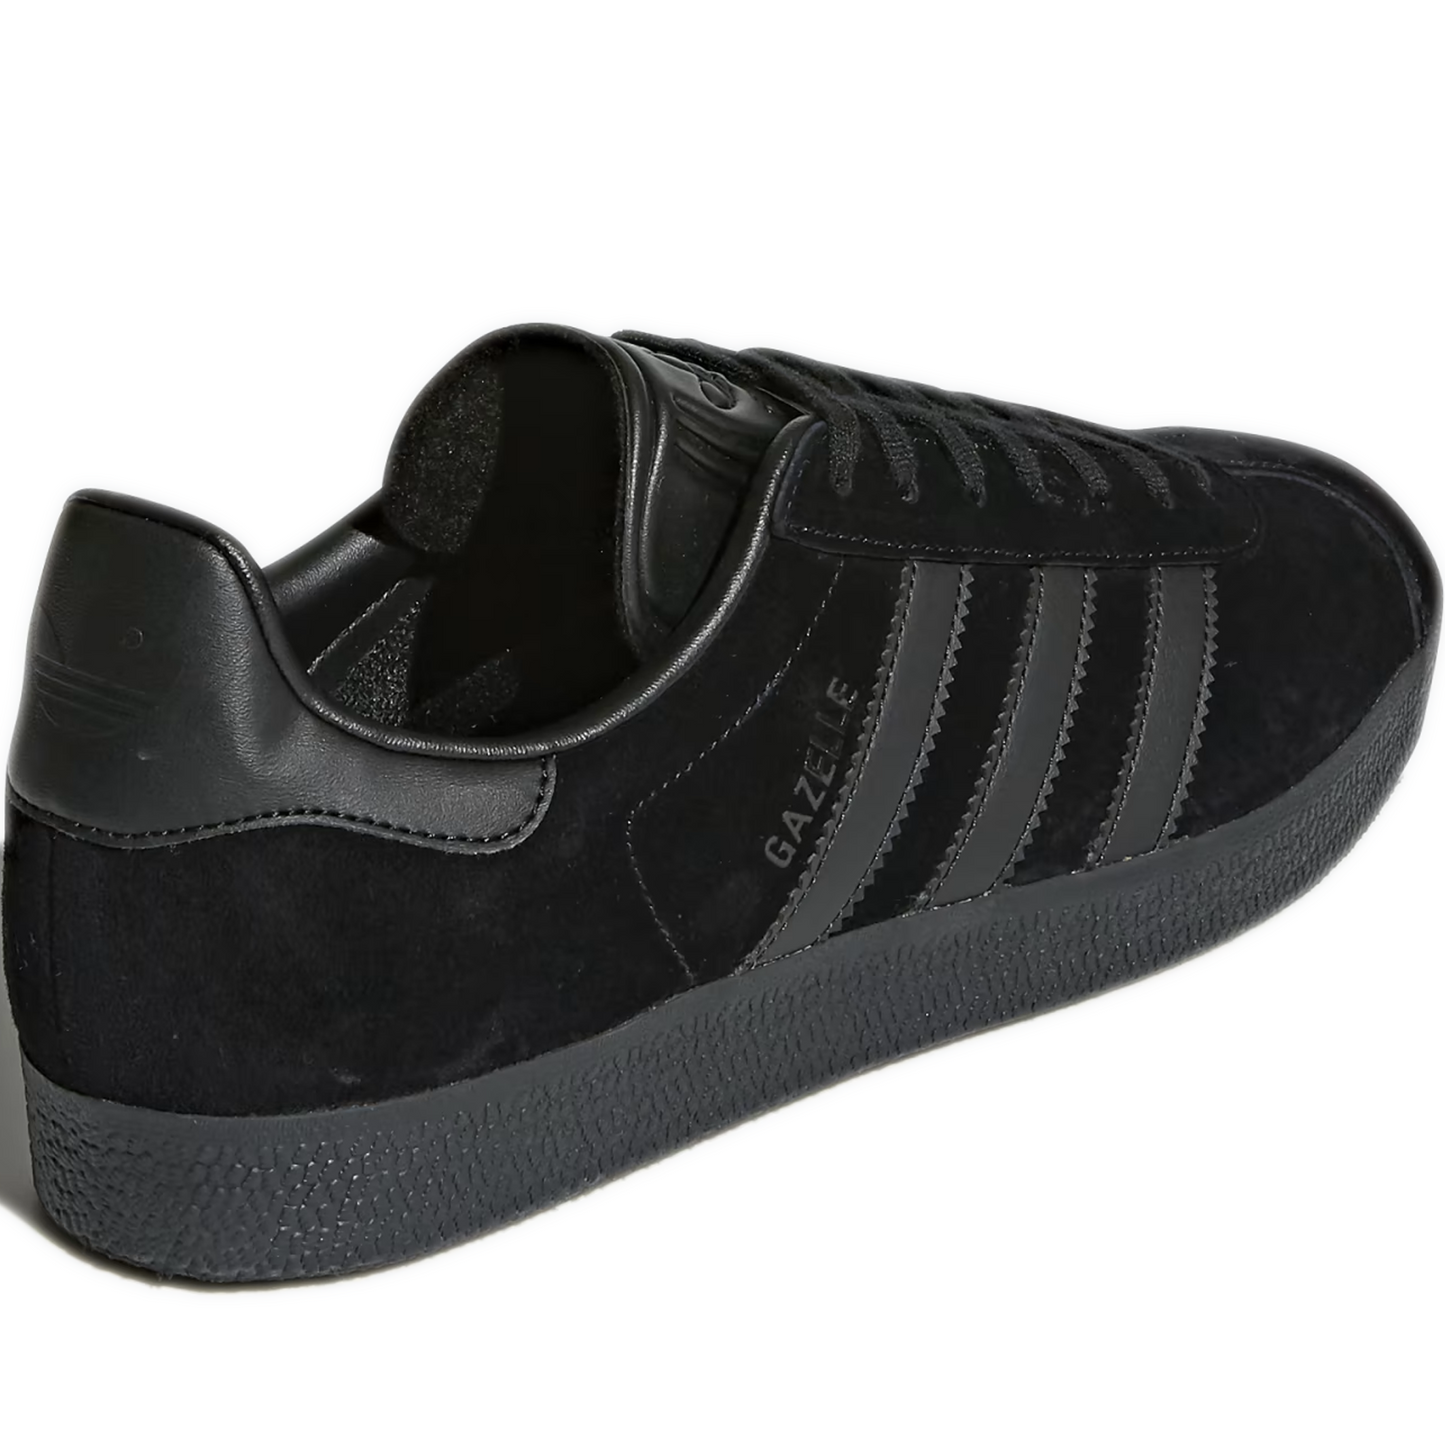 Men's Adidas Gazelle Shoes - All Black